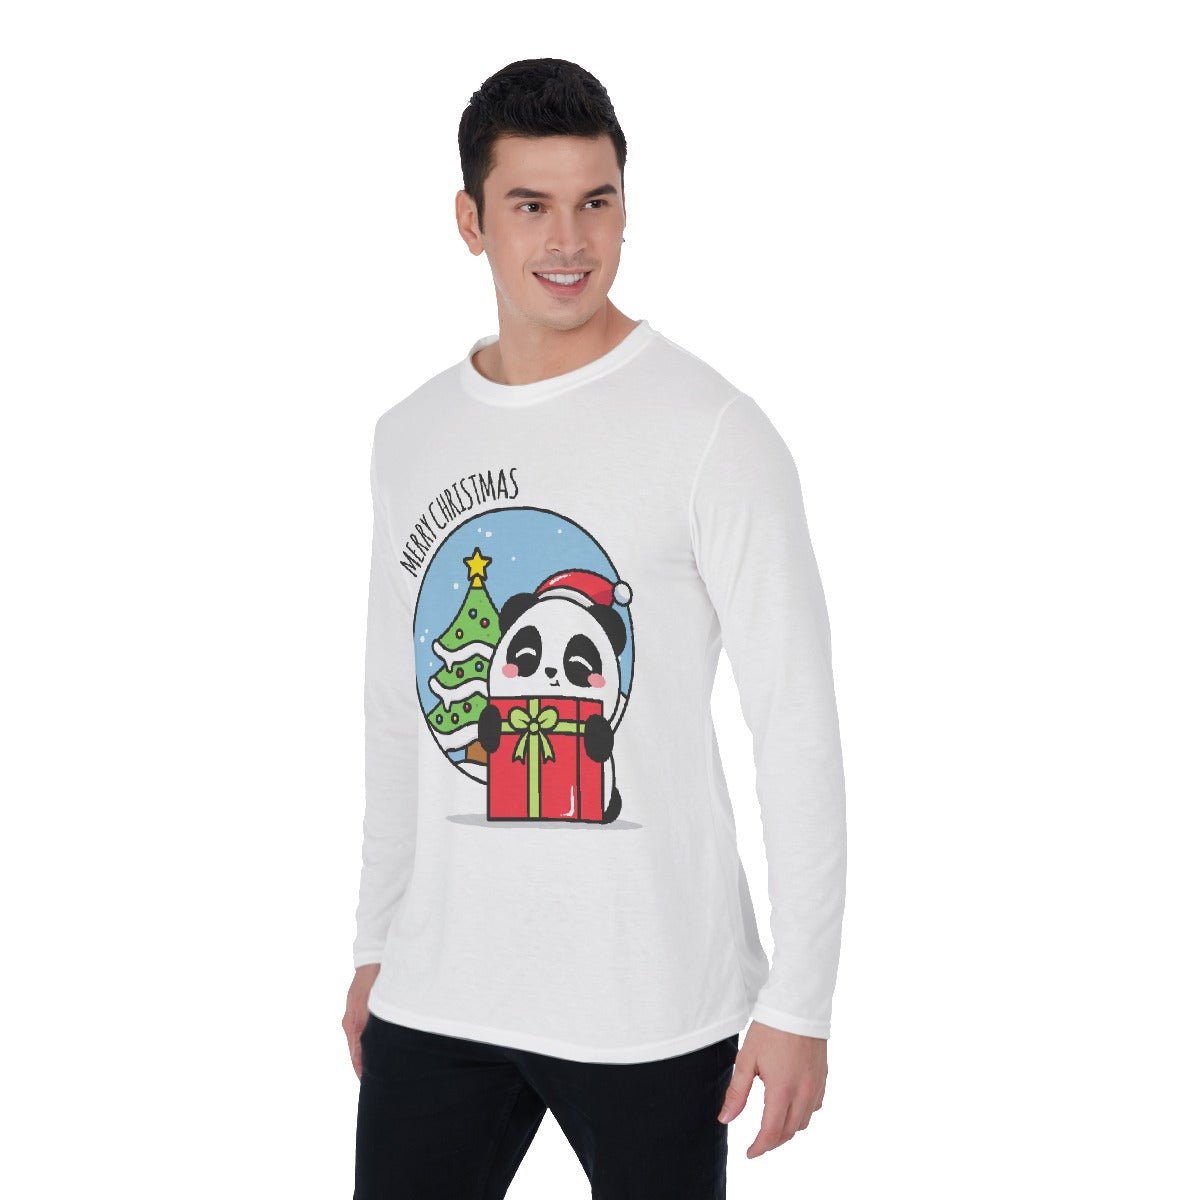 Men's Long Sleeve Christmas T-Shirt - Merry Panda - Festive Style